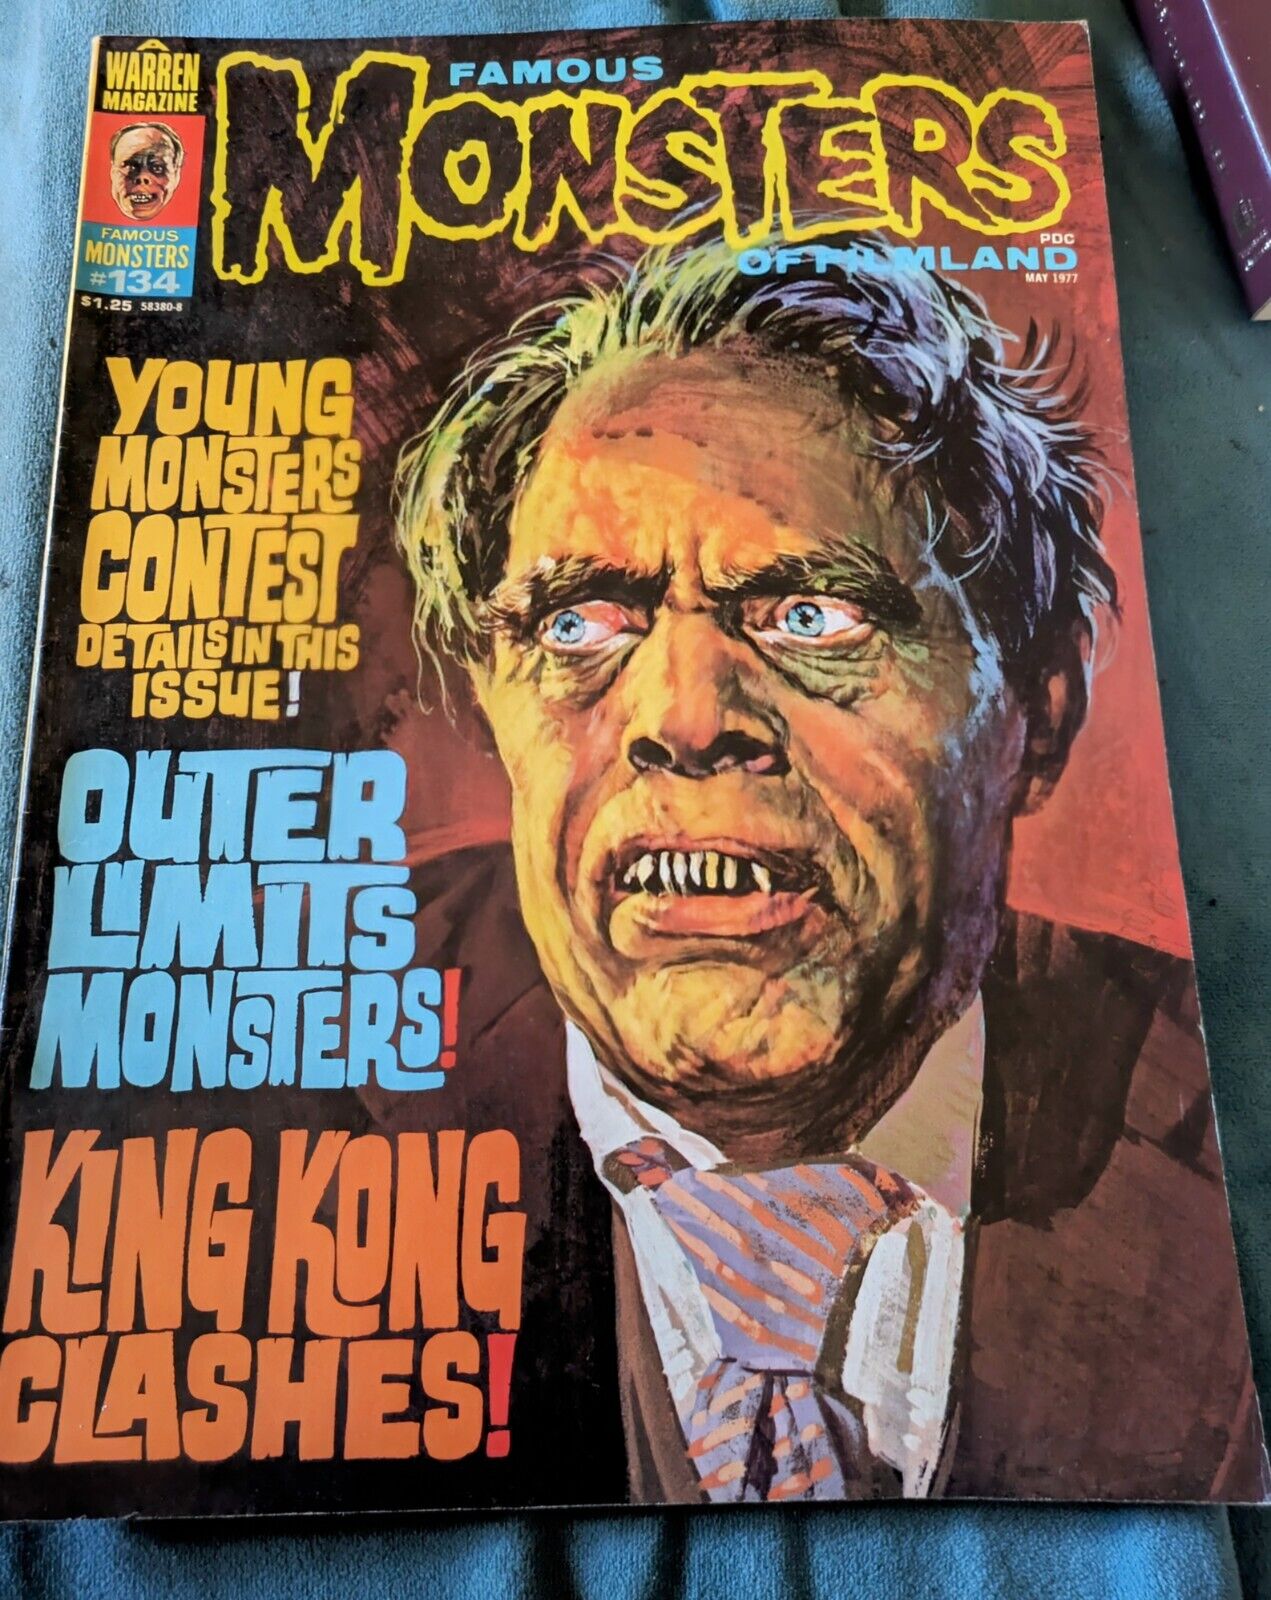 VTG 1977 Famous Monsters of Filmland -Warren Magazine- May # 134 Issue